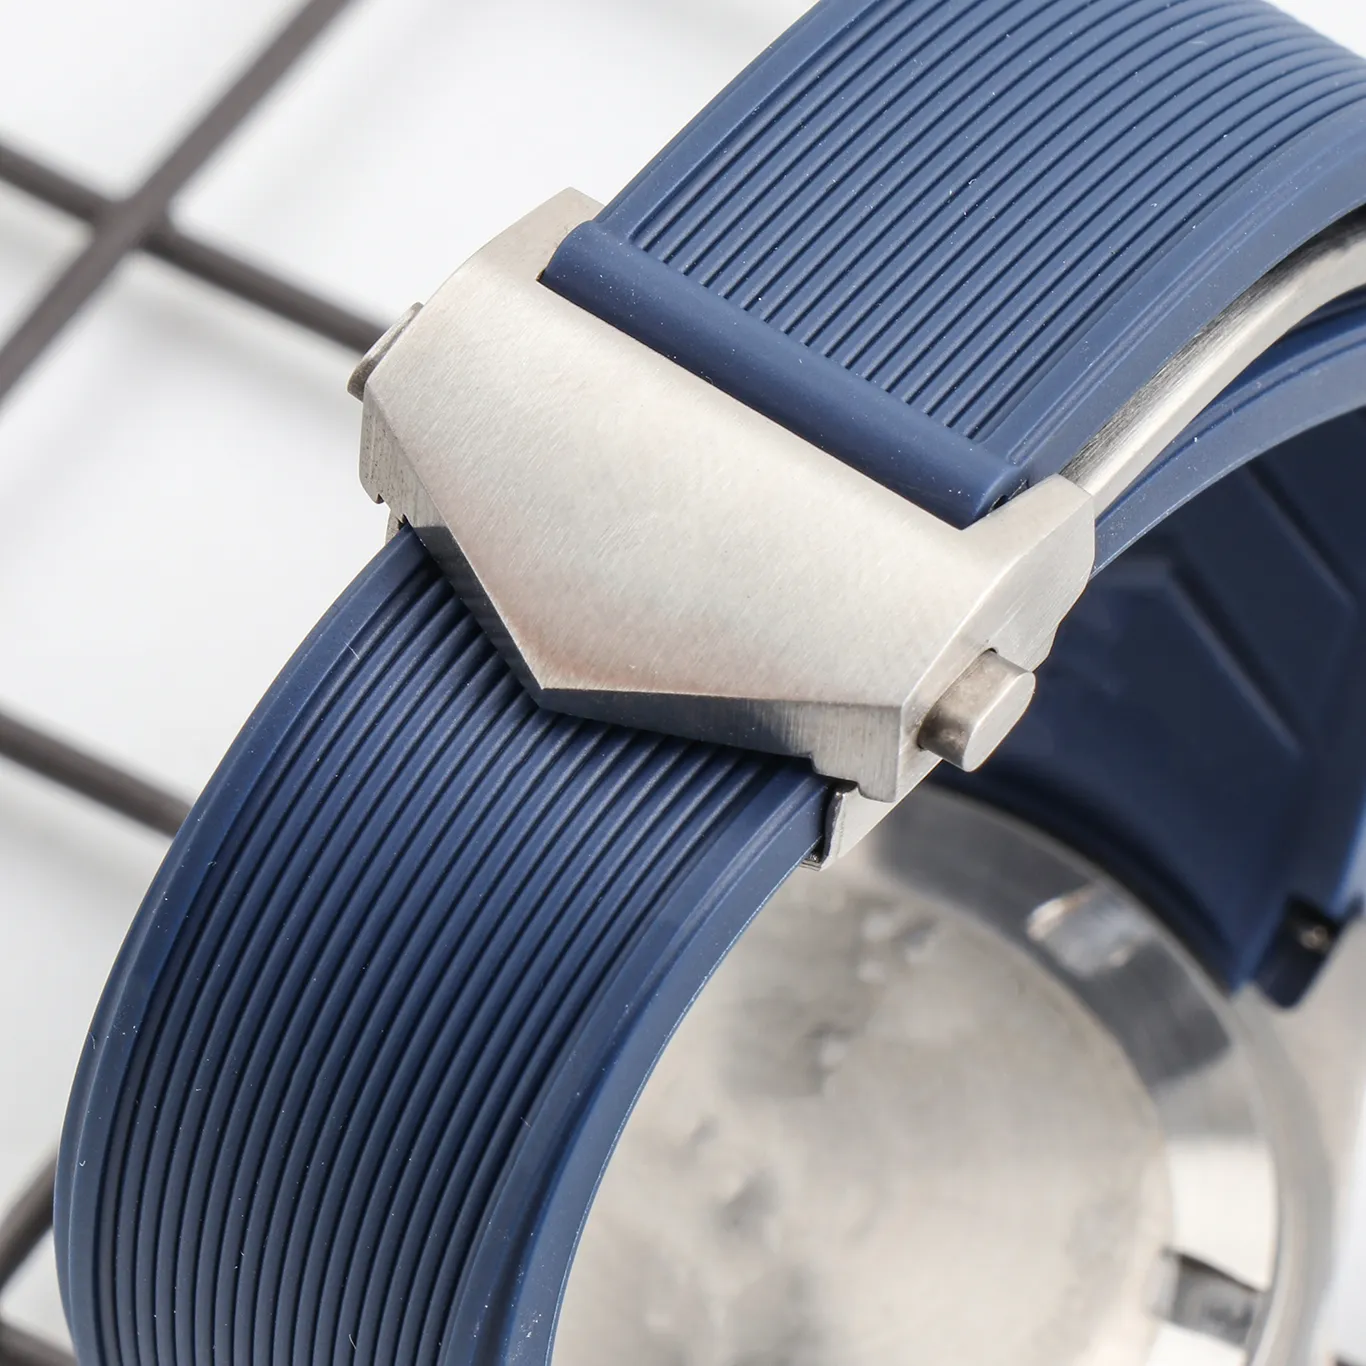 Waterproof Rubber Watchband Stainless Steel Fold Buckle Watch Band Strap for AQUARACER Bracelet Watch Man 22-18mm Black Blue Brown287o